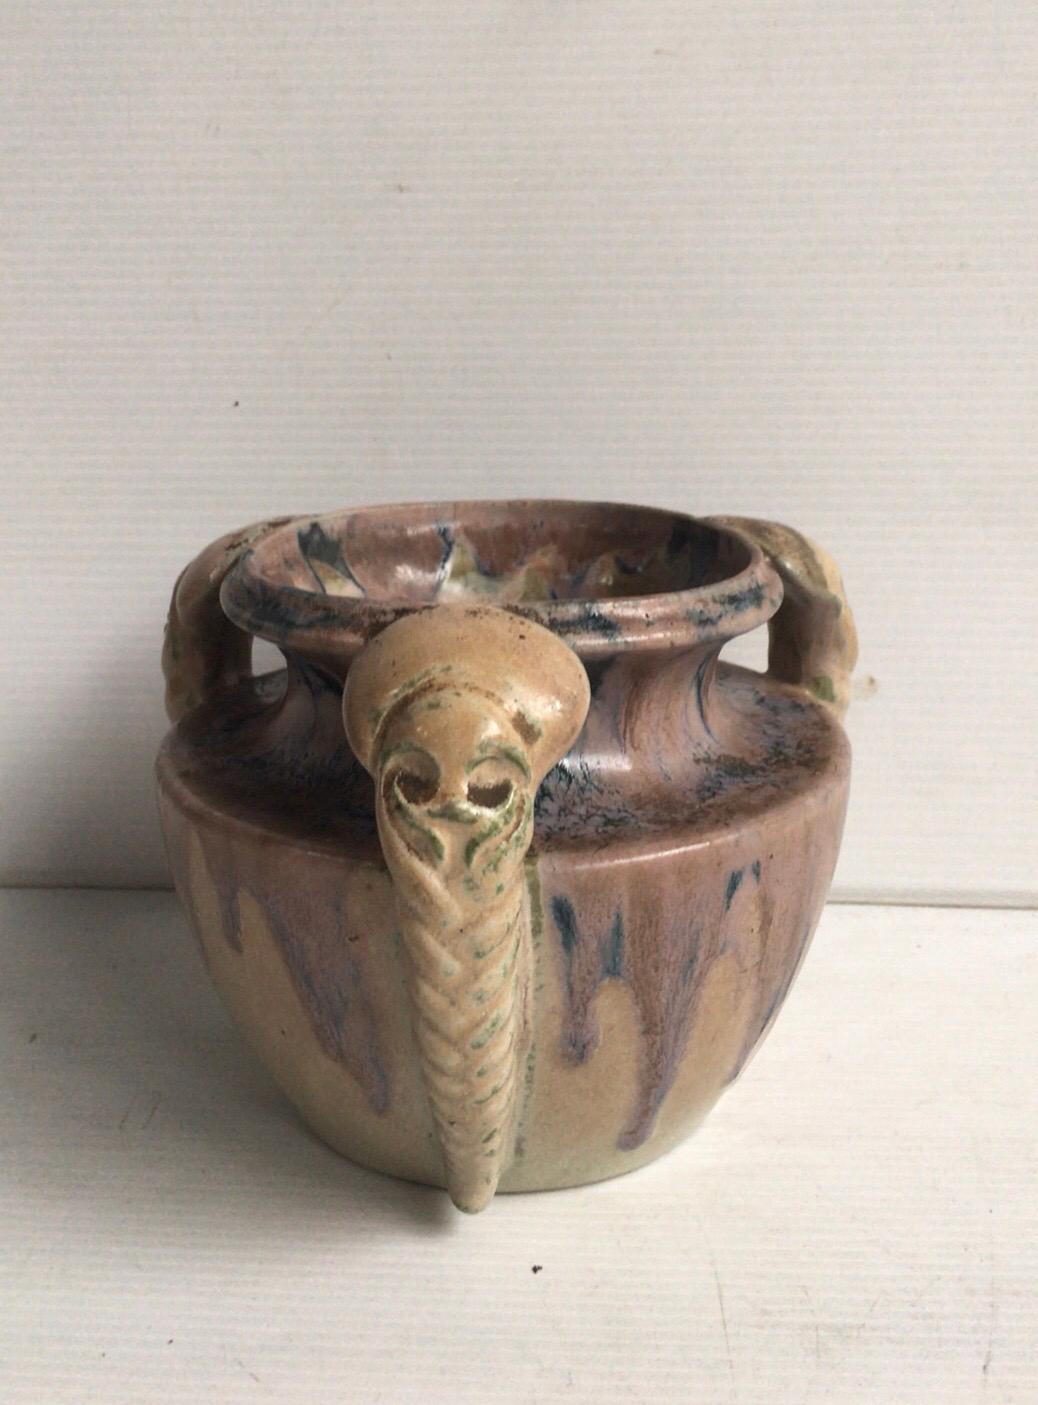 Art Deco pottery vase signed Charles Greber, circa 1930.
3 fantastic animals as handles.
  